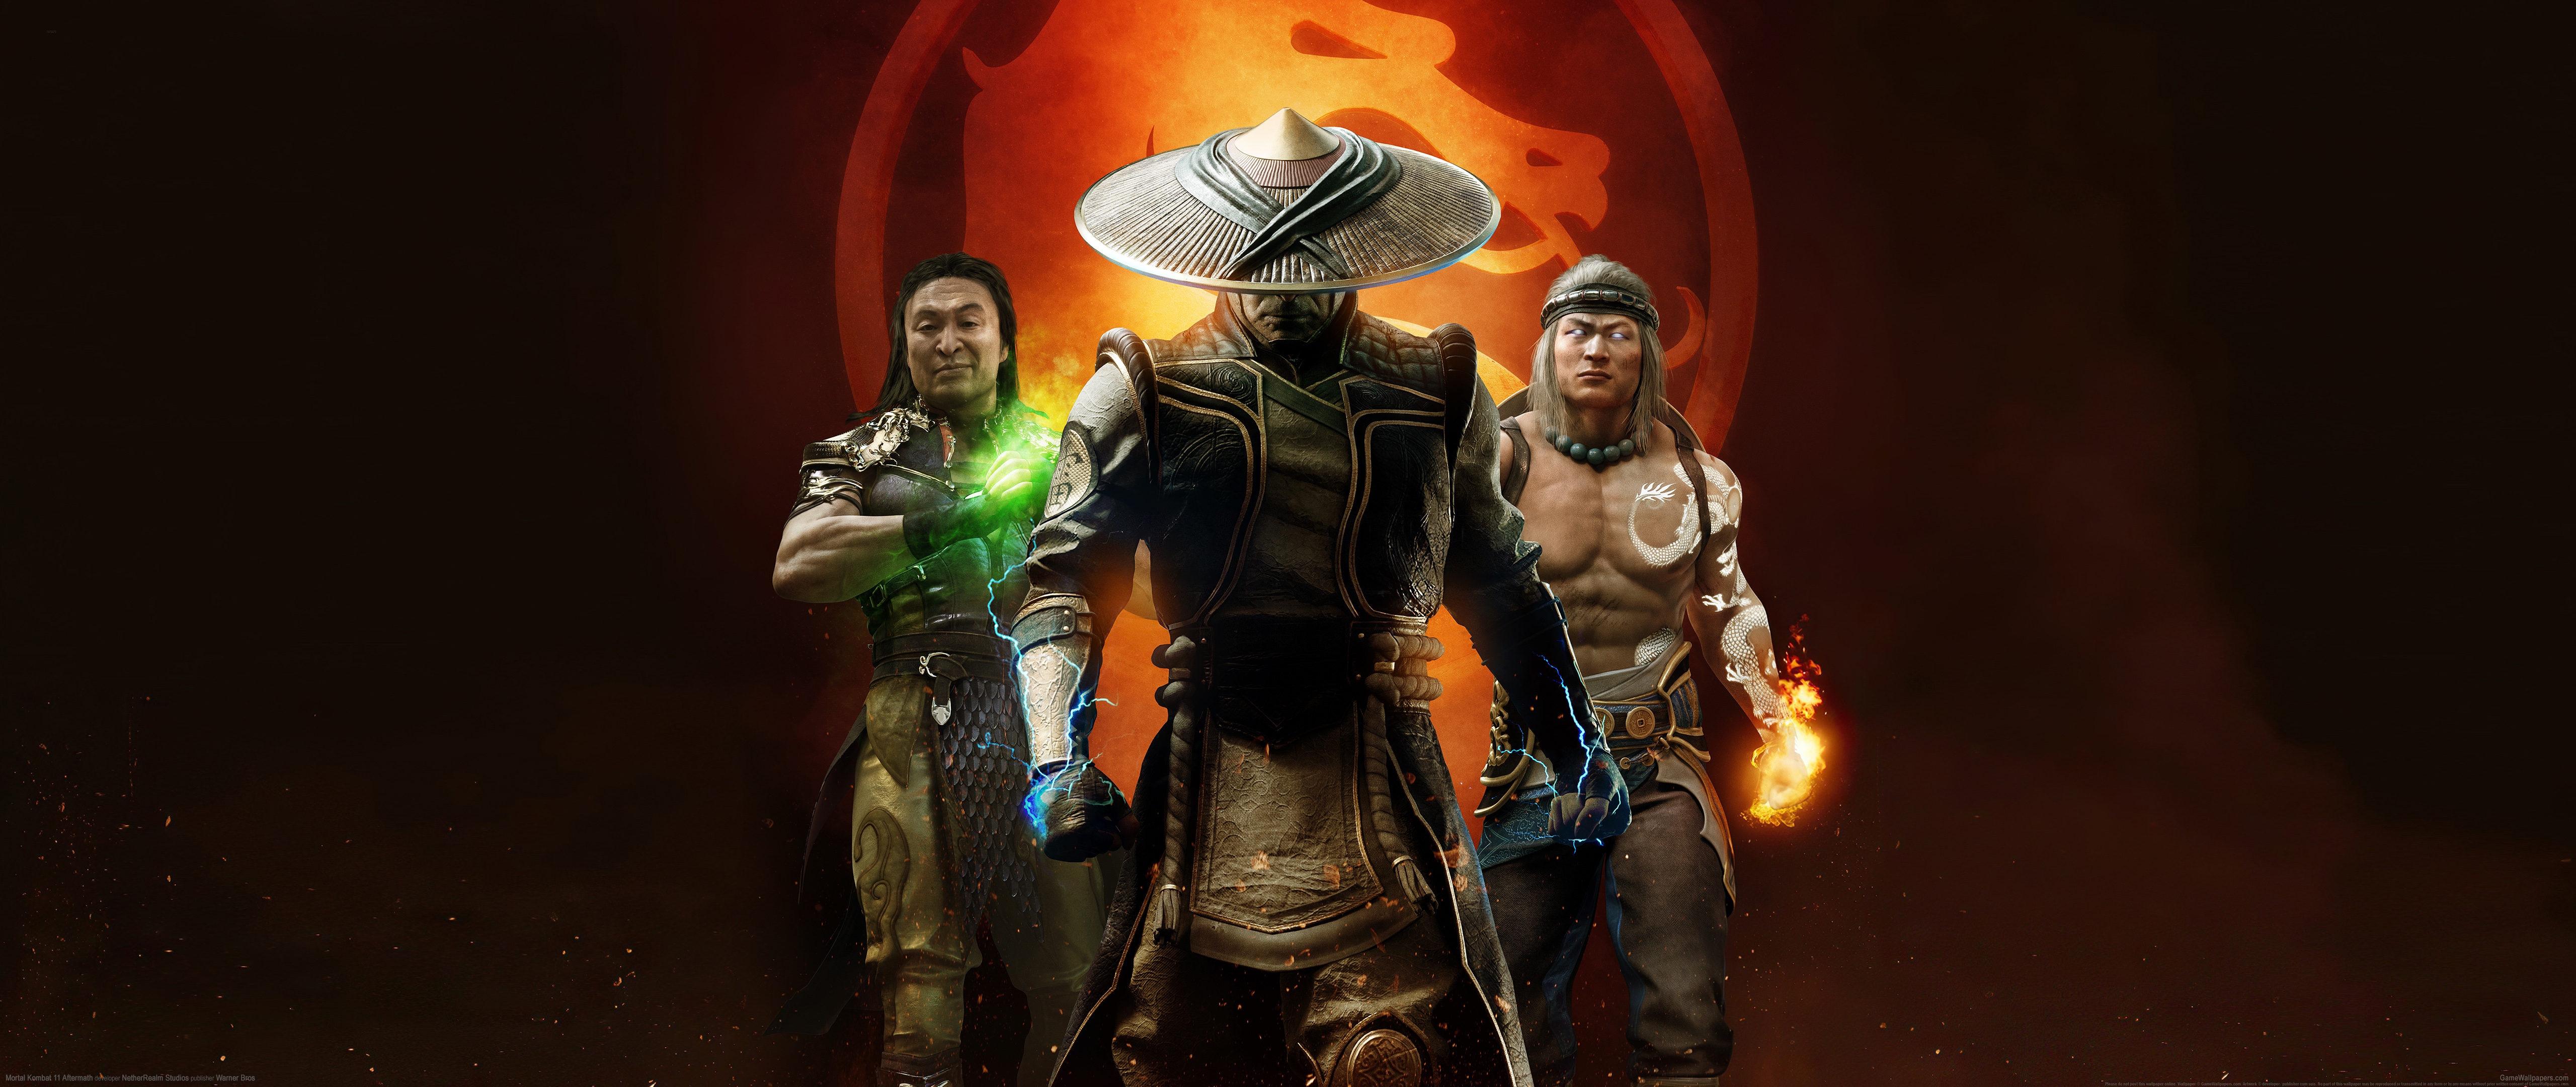 Mortal Kombat 11 Aftermath 5120x2160 wallpaper or background 01